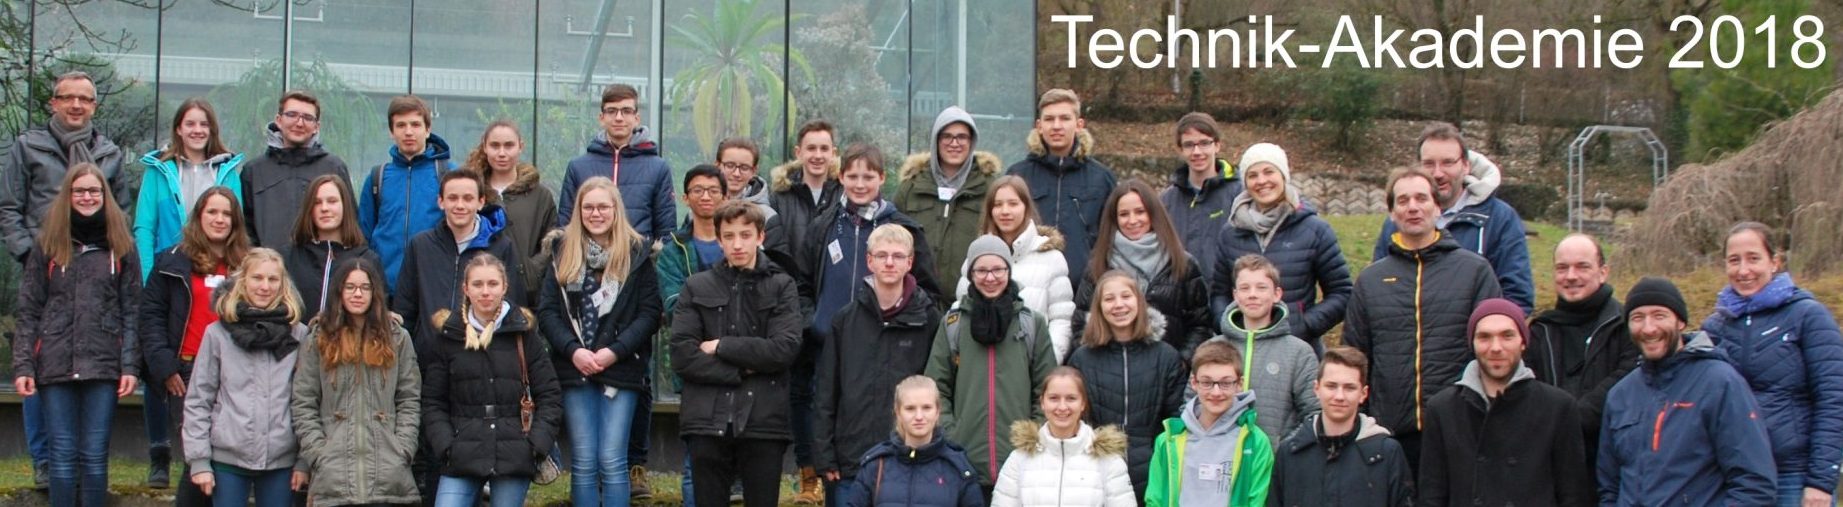 Technik-Akademie 2018